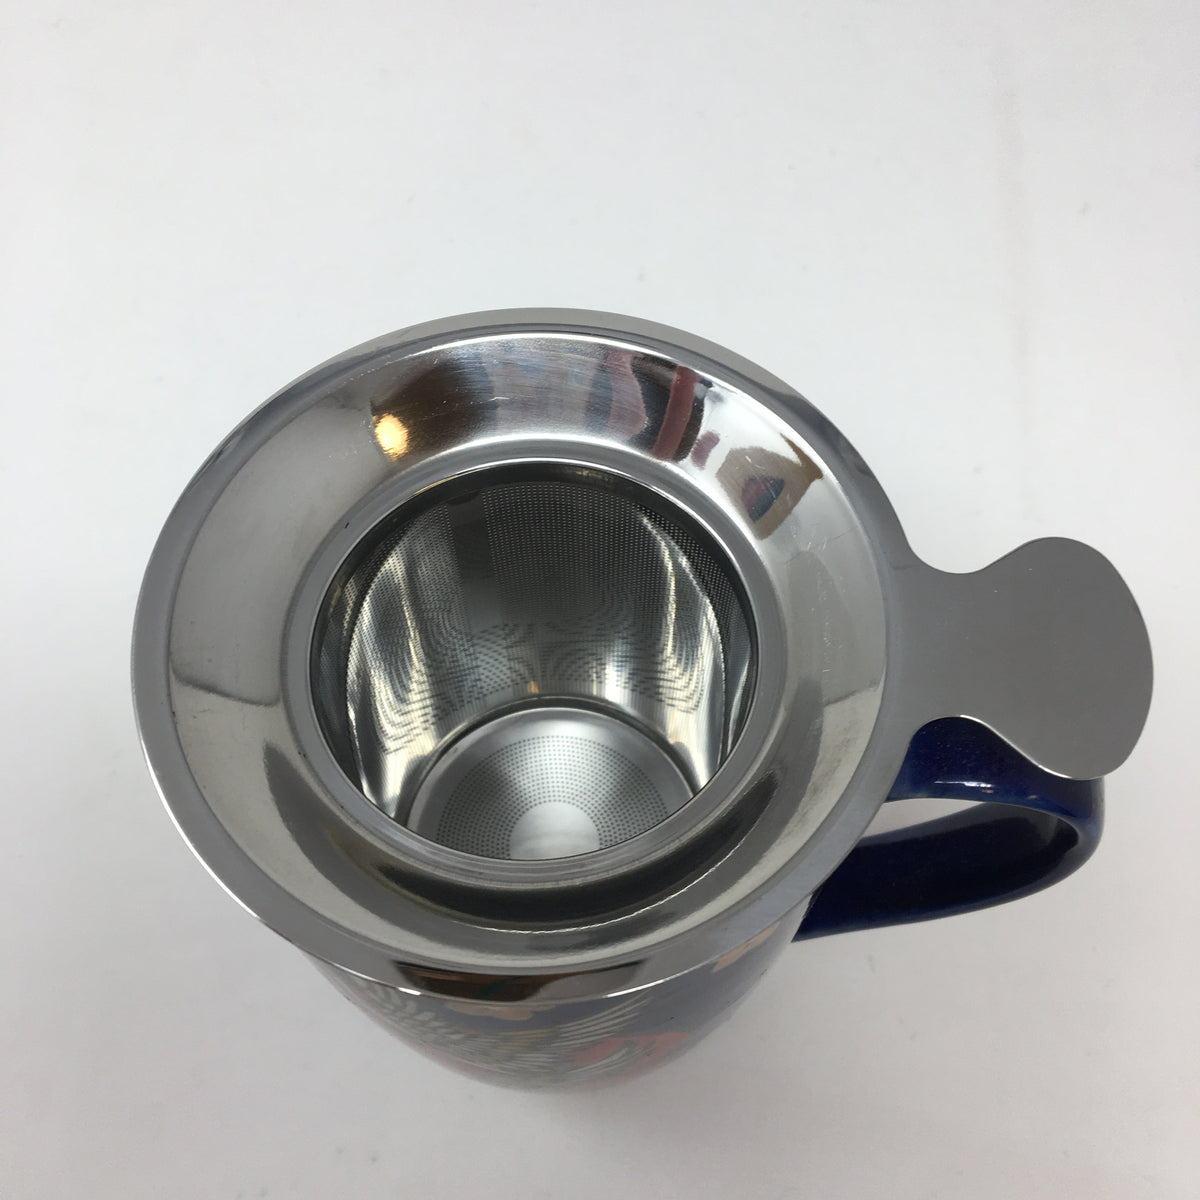 Japanese Ceramic Travel Tea Cup